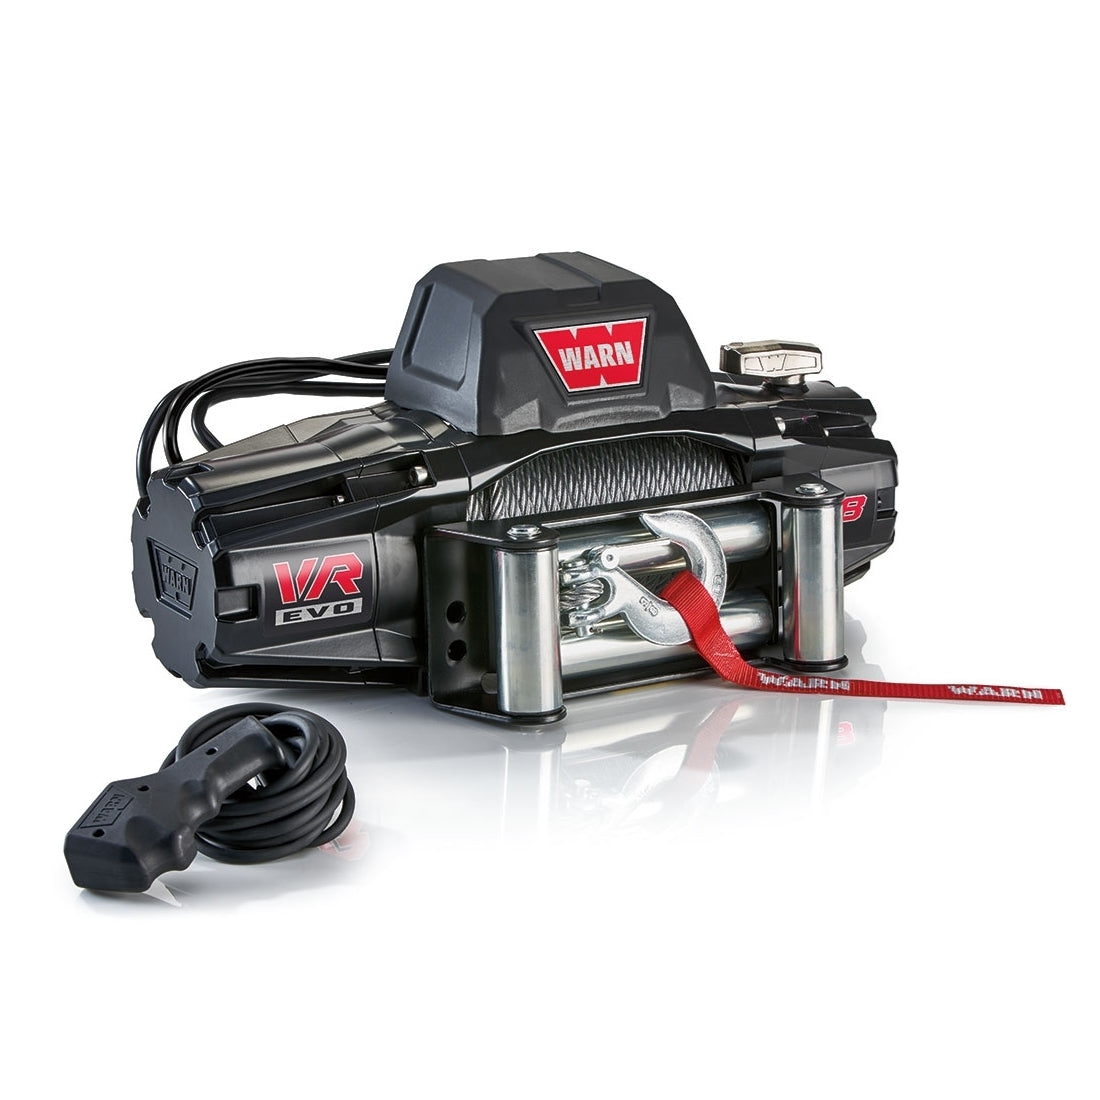 WARN VR EVO 8 Winch W/Steel Cable - 0